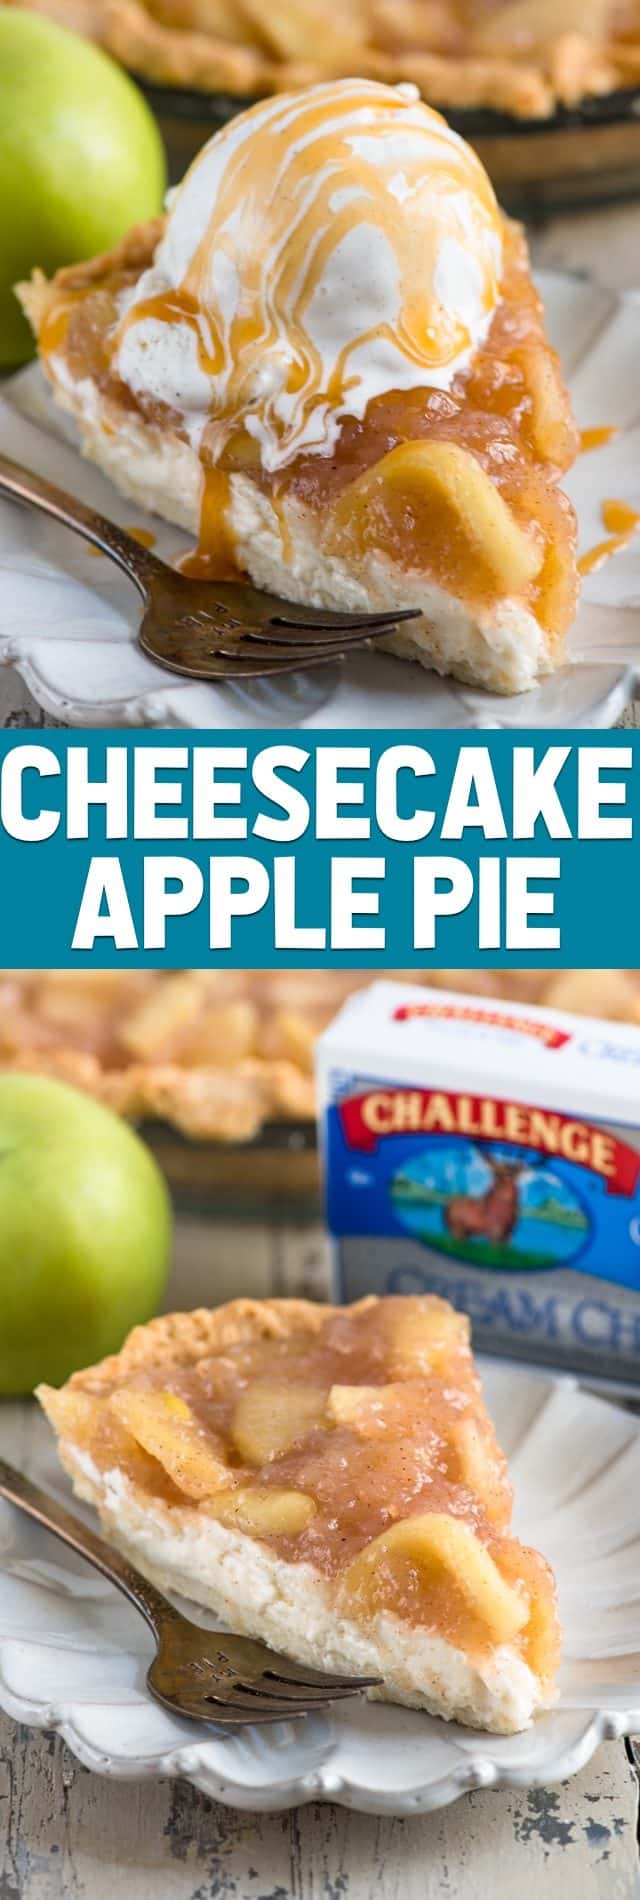 cheesecake apple pie photos